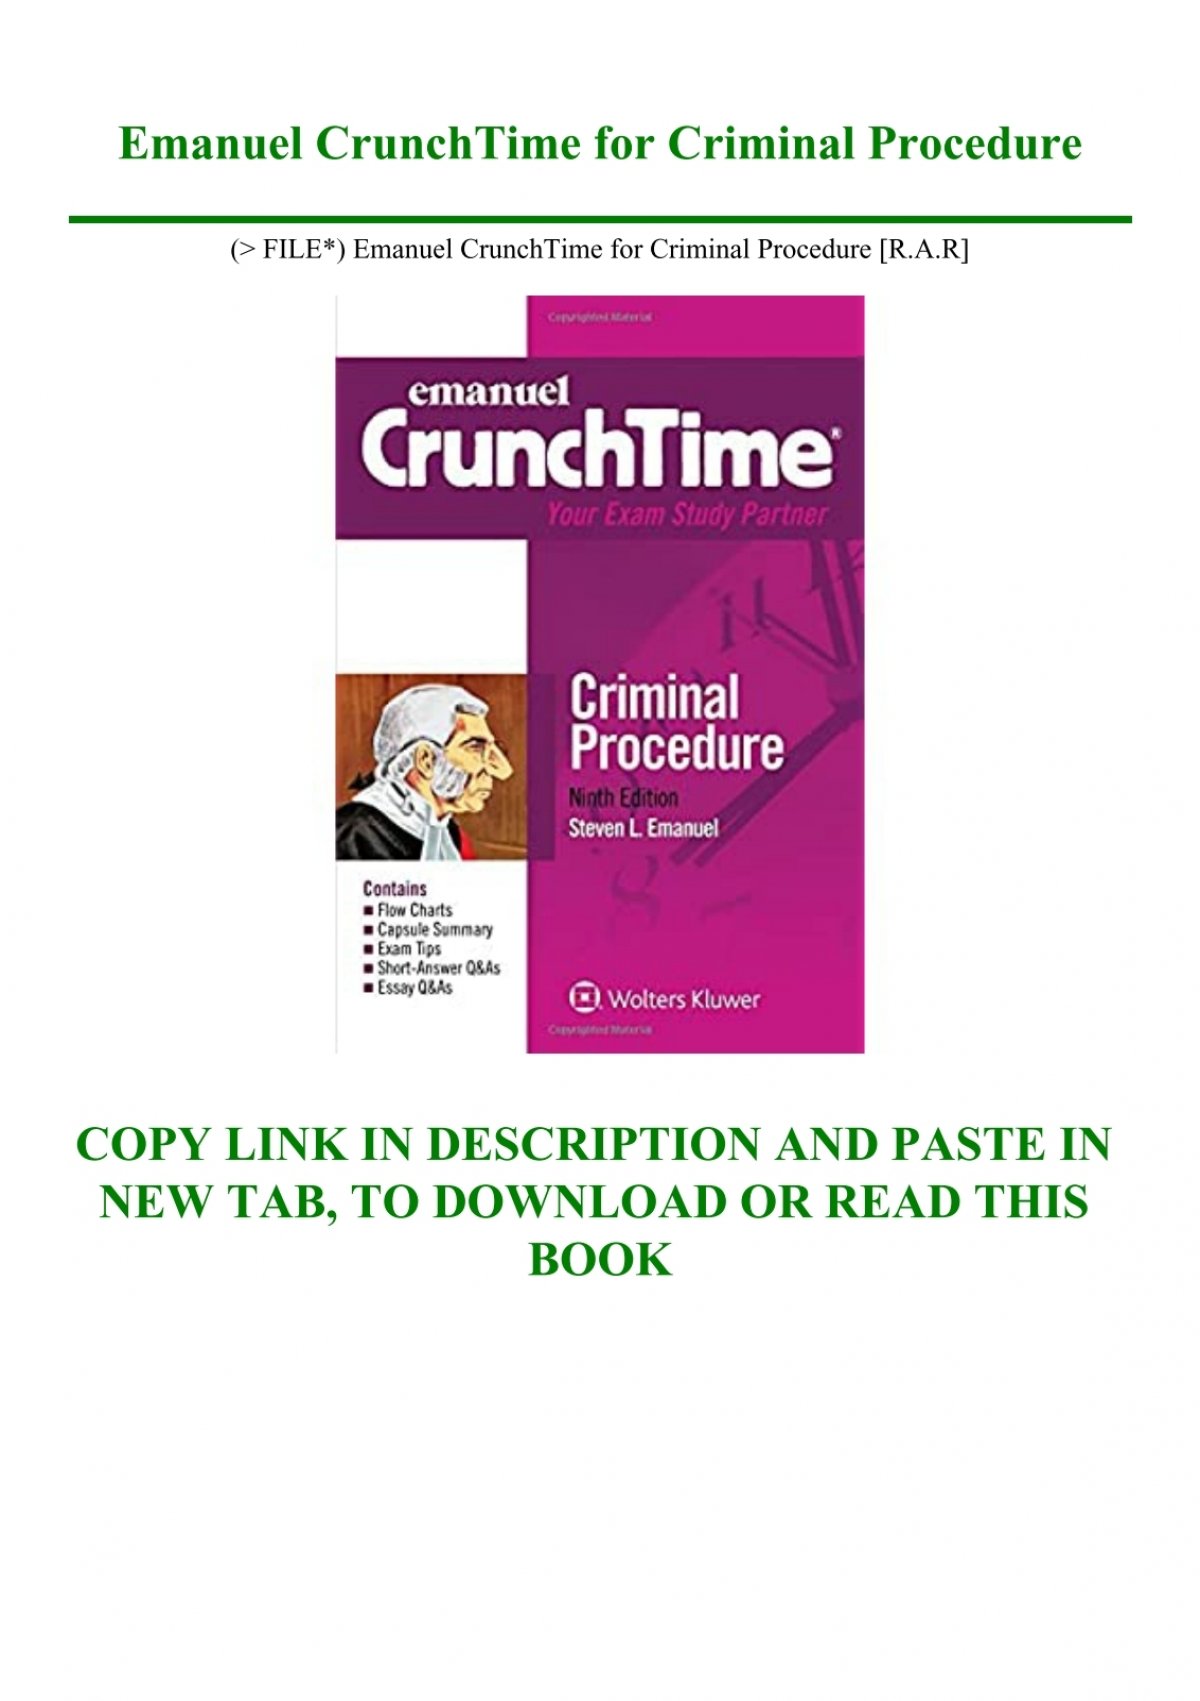 P.D.F. FILE) Emanuel CrunchTime for Criminal Procedure [R.A.R]